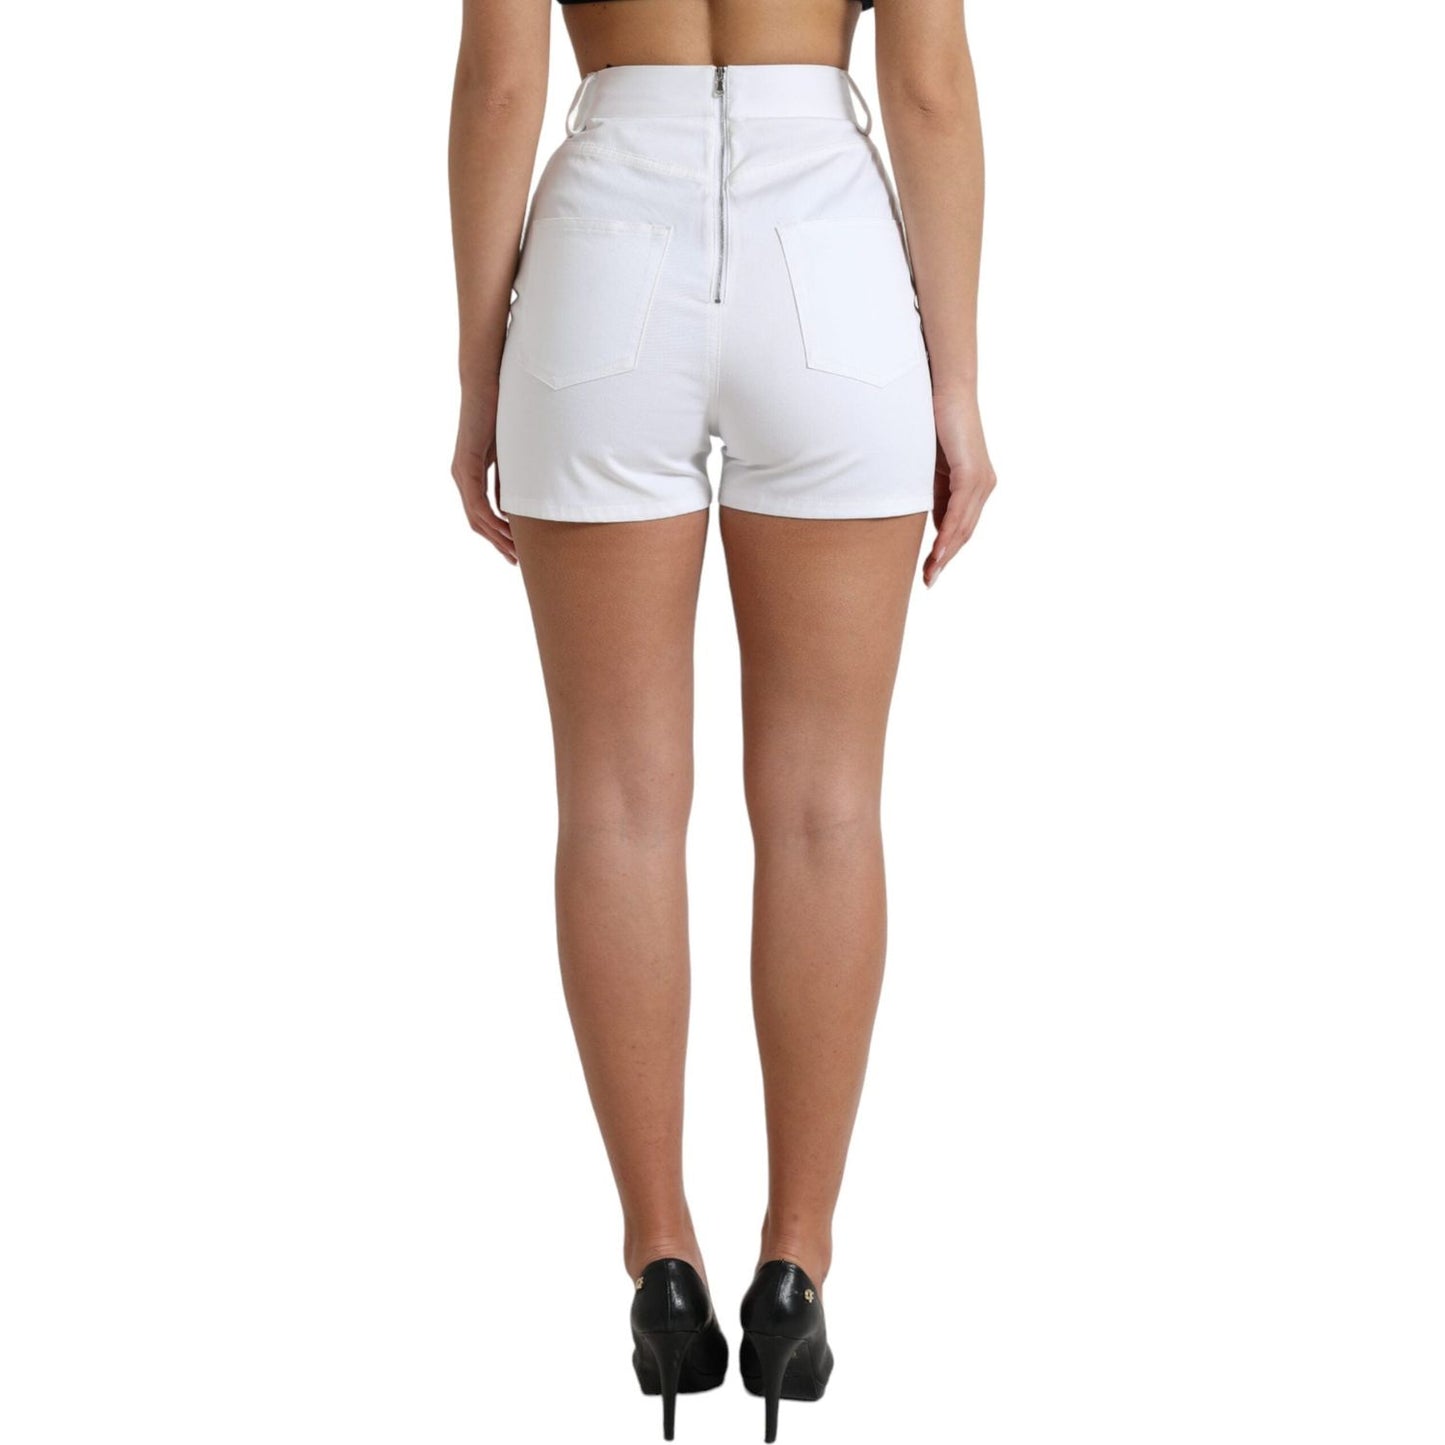 Dolce & Gabbana Chic High Waist Lace Closure Shorts white-front-lace-high-waist-hot-pants-shorts